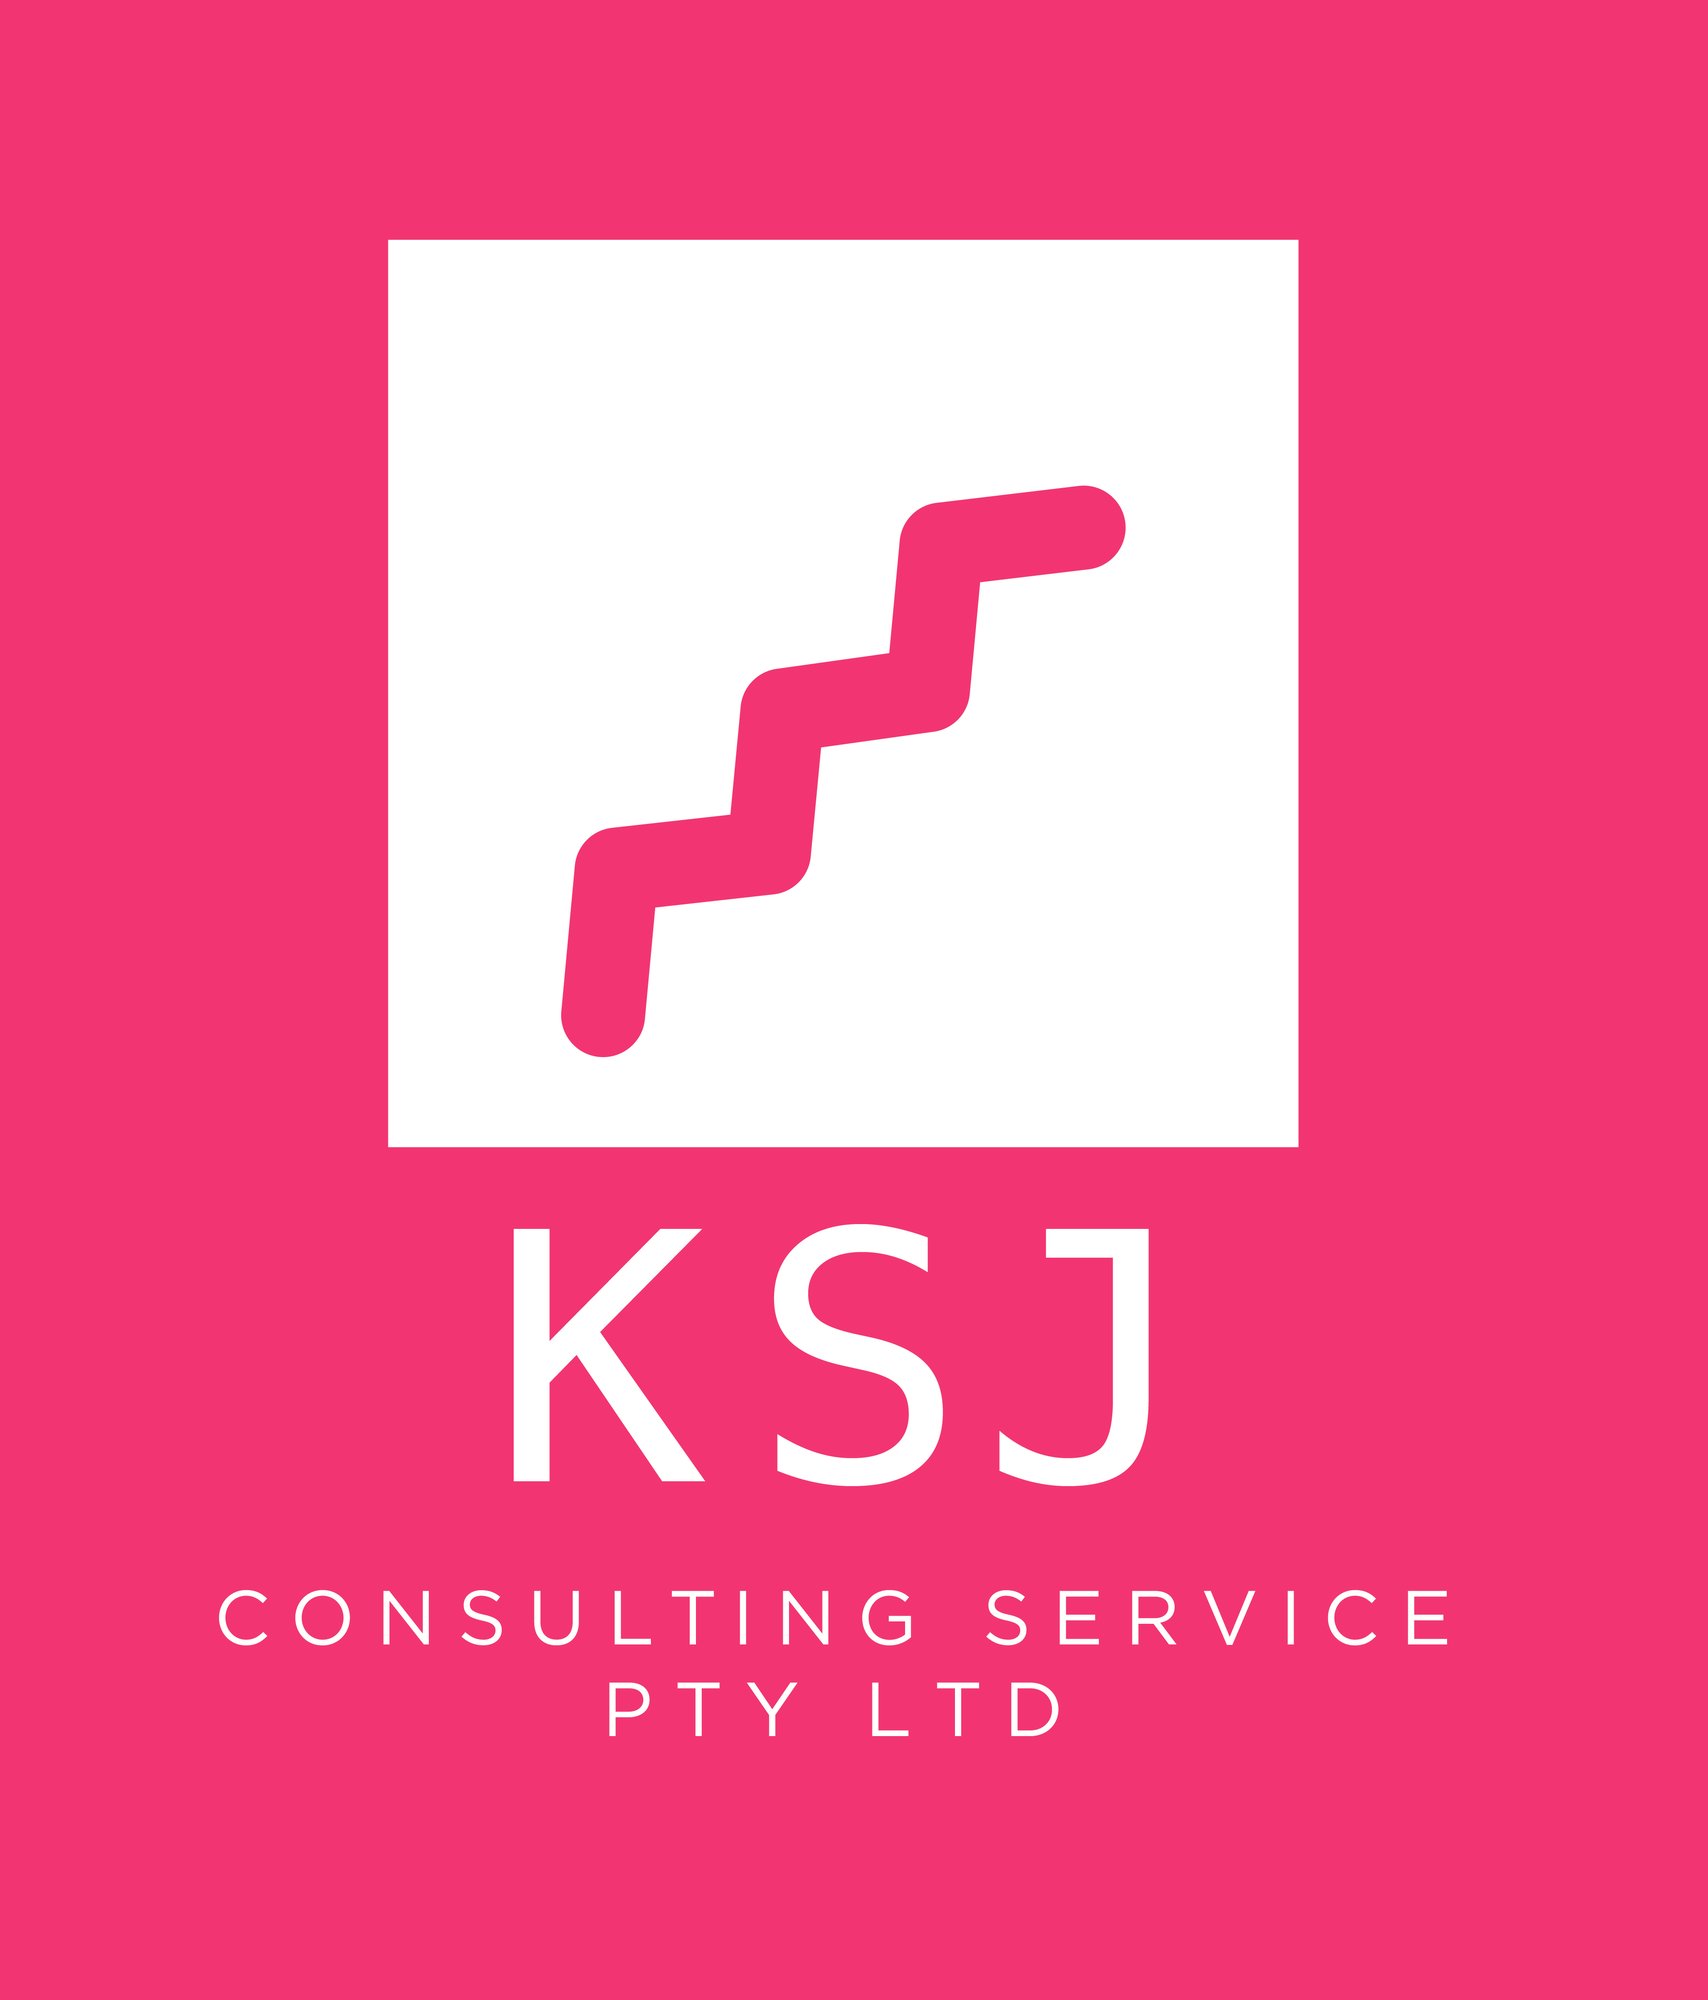 KSJ Consulting Service